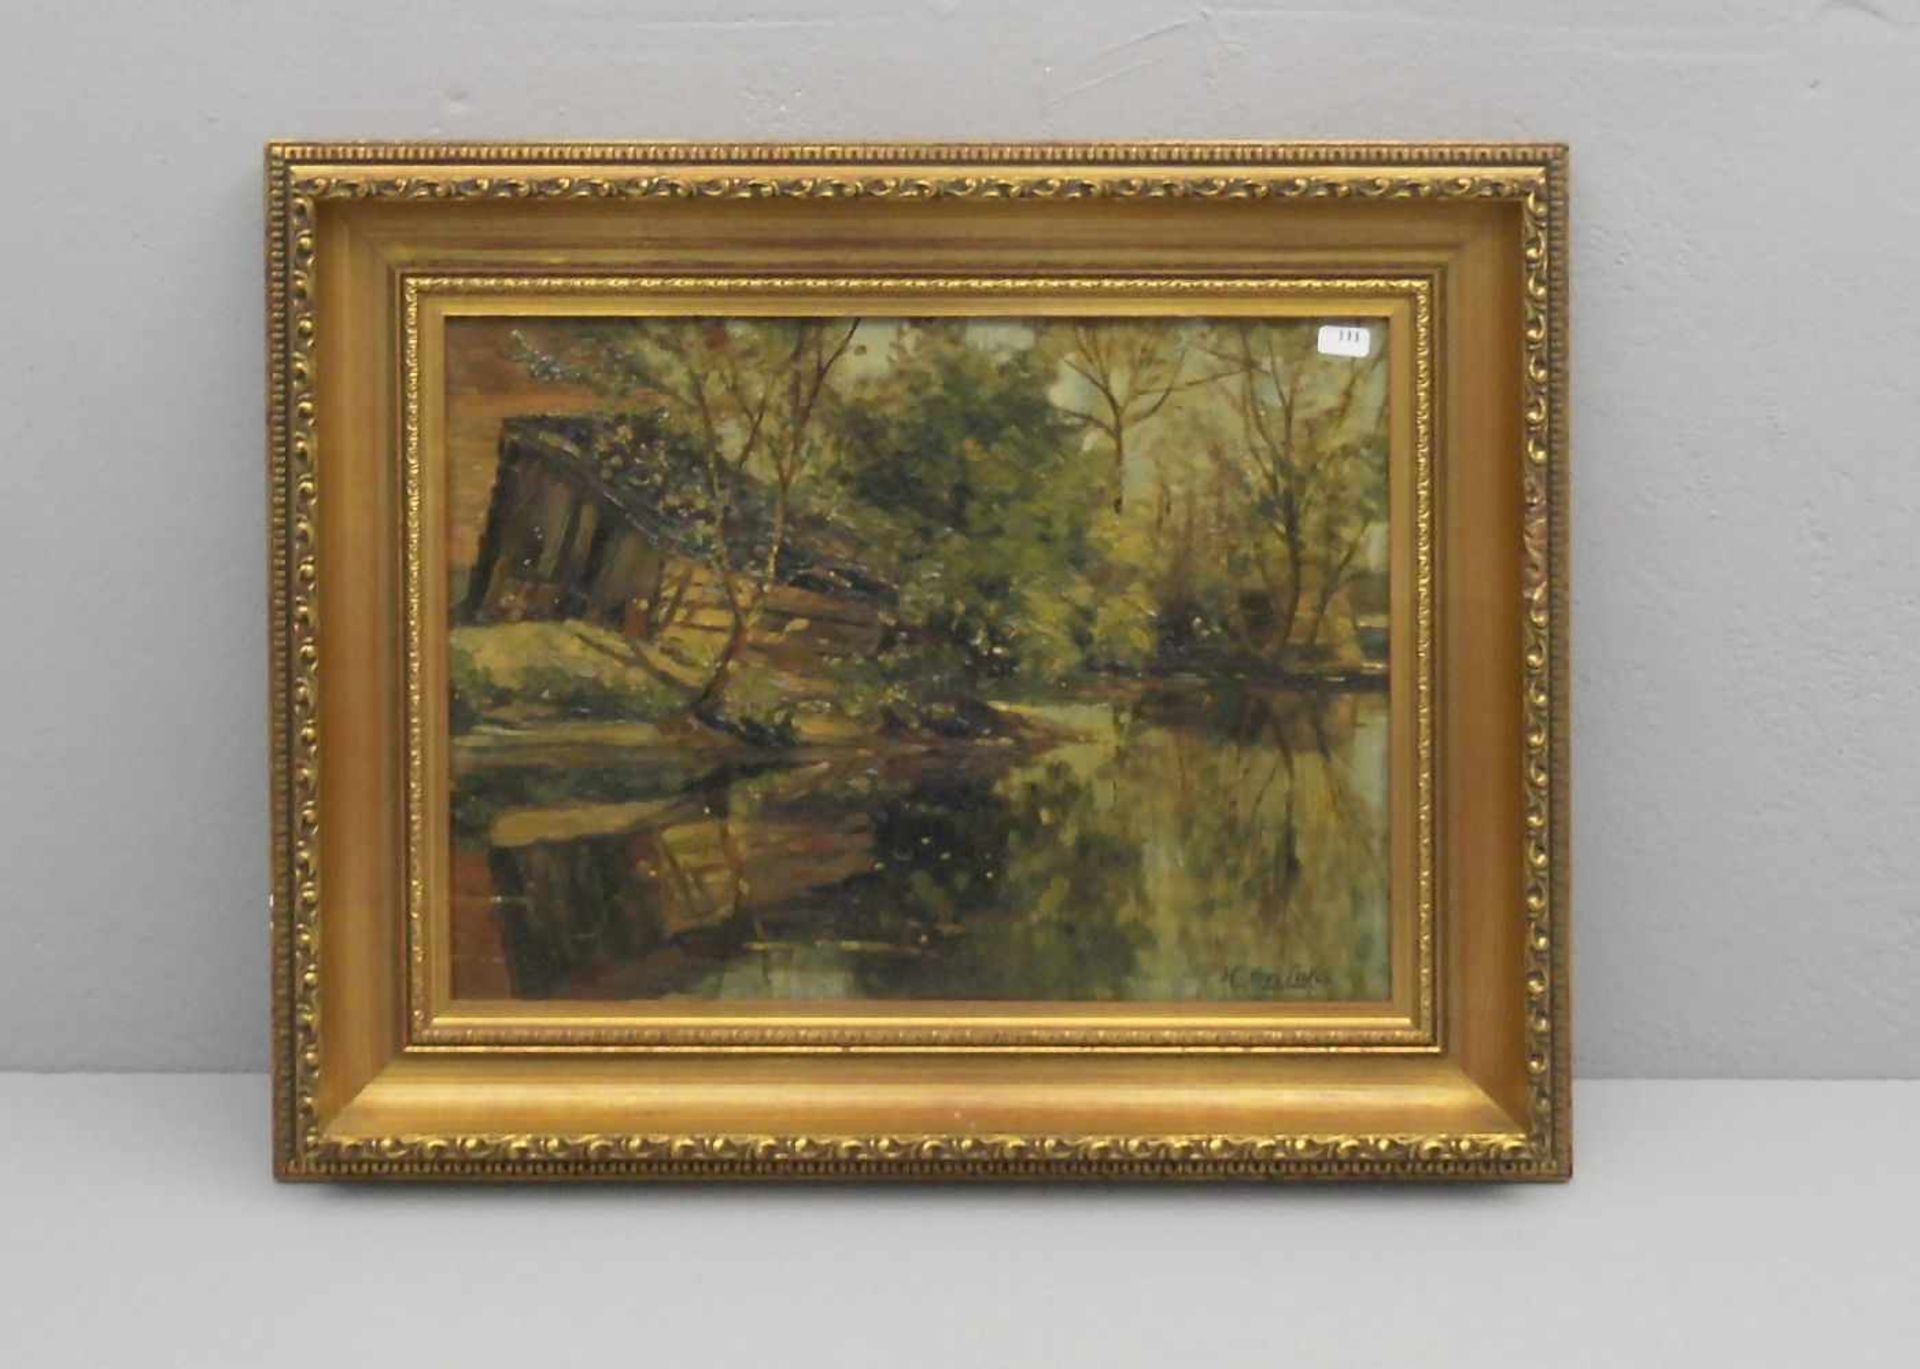 TEN KATE, HENDRICK GERRIT (1803-1856), Gemälde / painting: "Am Gewässer", Öl auf Leinwand / oil on